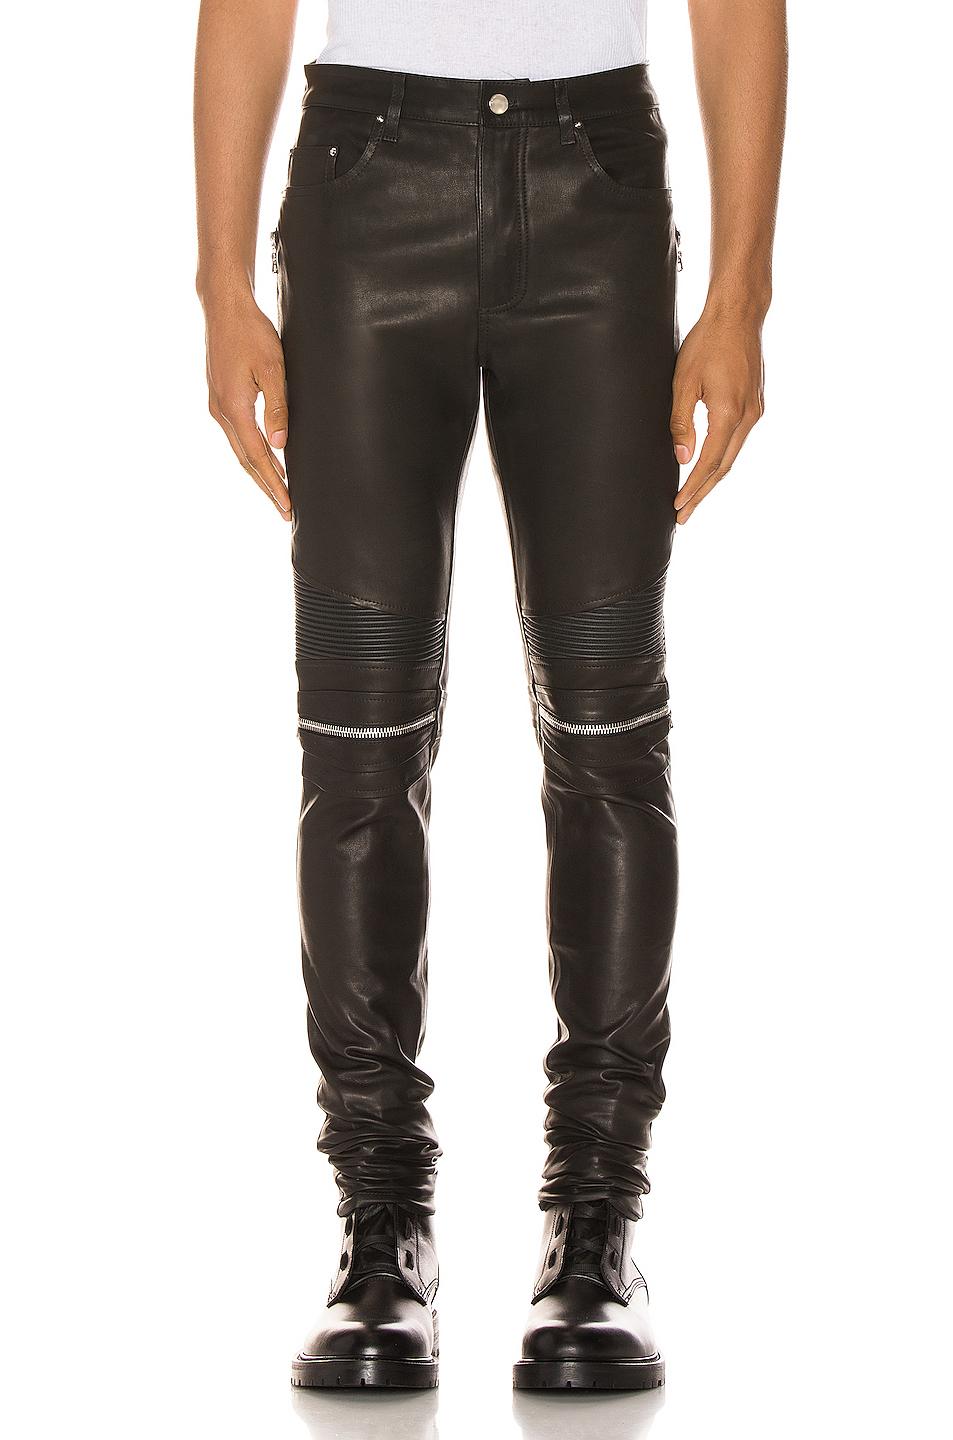 Amiri Mx2 Leather Pants in Black & Silver (Black) for Men - Lyst